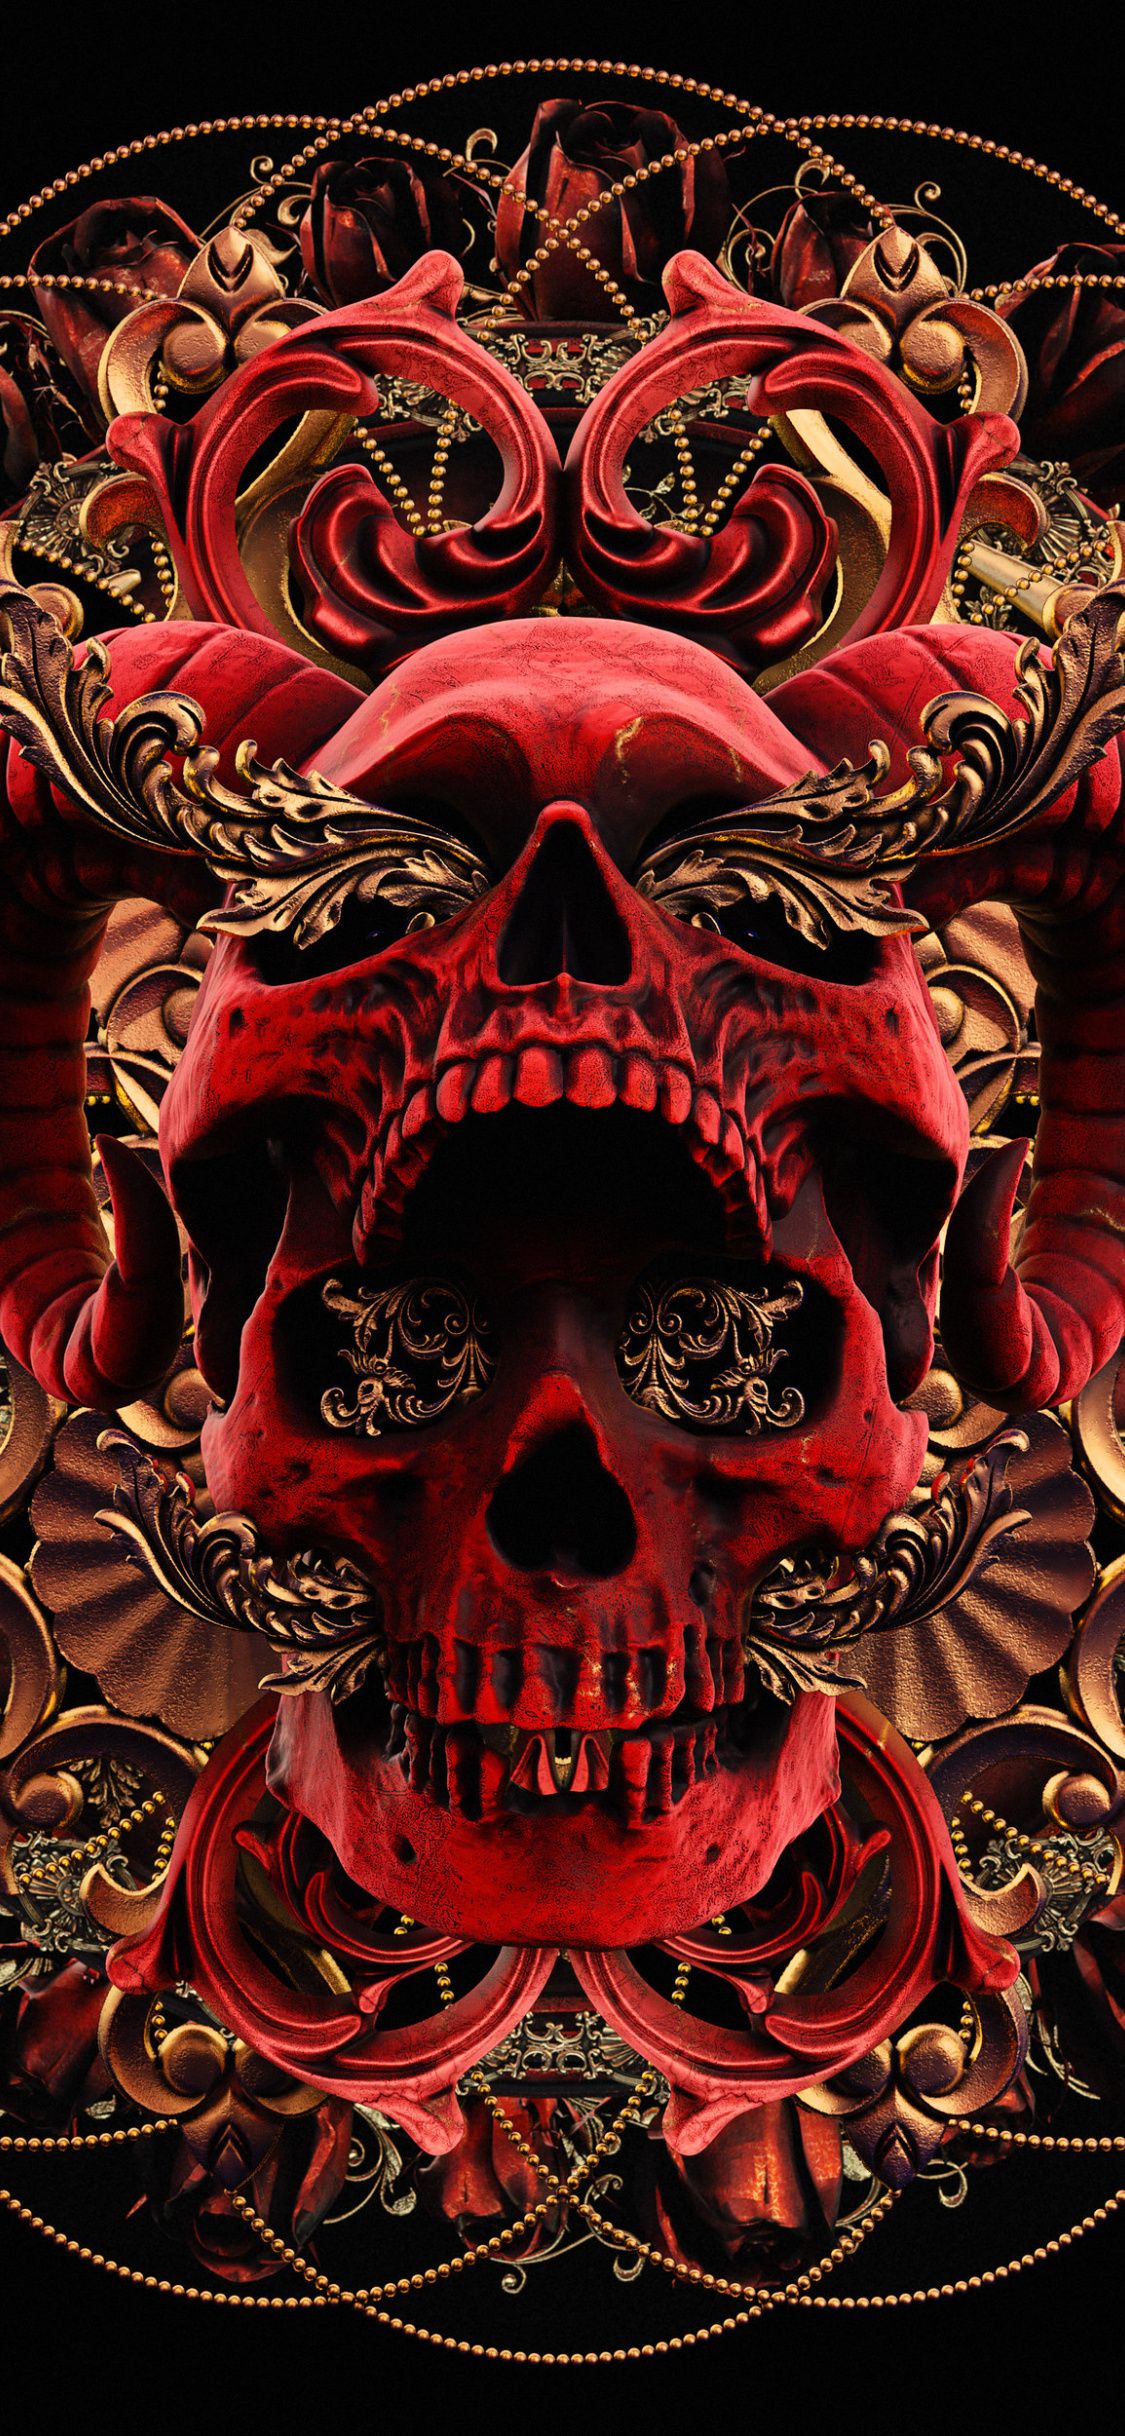 Red skull, fantasy, art wallpaper, 2500x HD image, picture